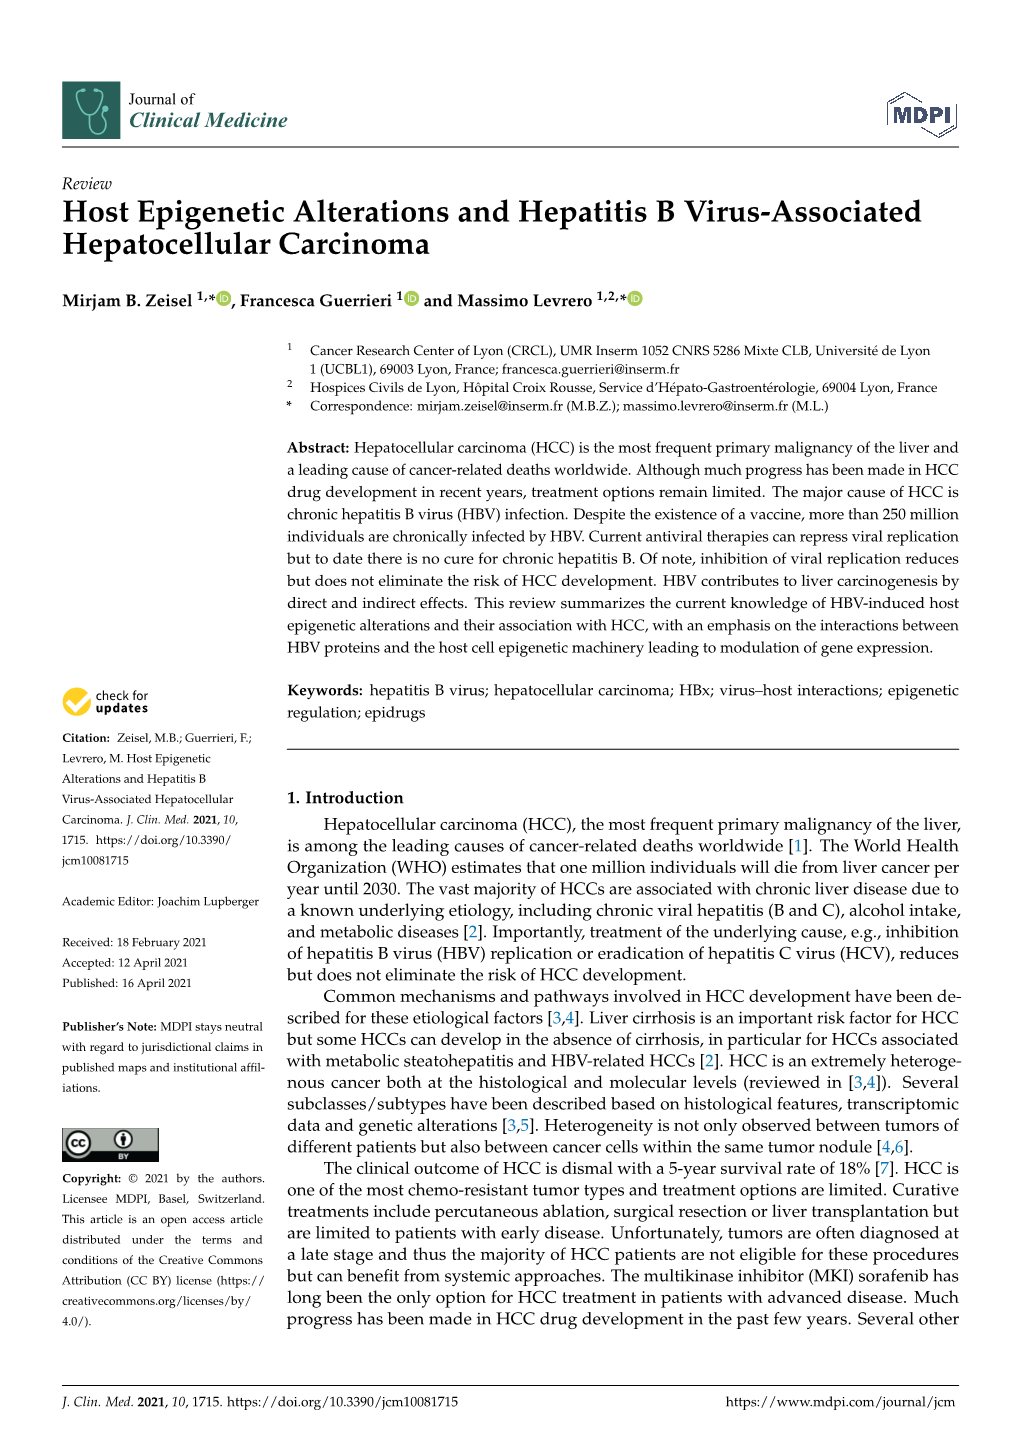 Host Epigenetic Alterations and Hepatitis B Virus-Associated Hepatocellular Carcinoma